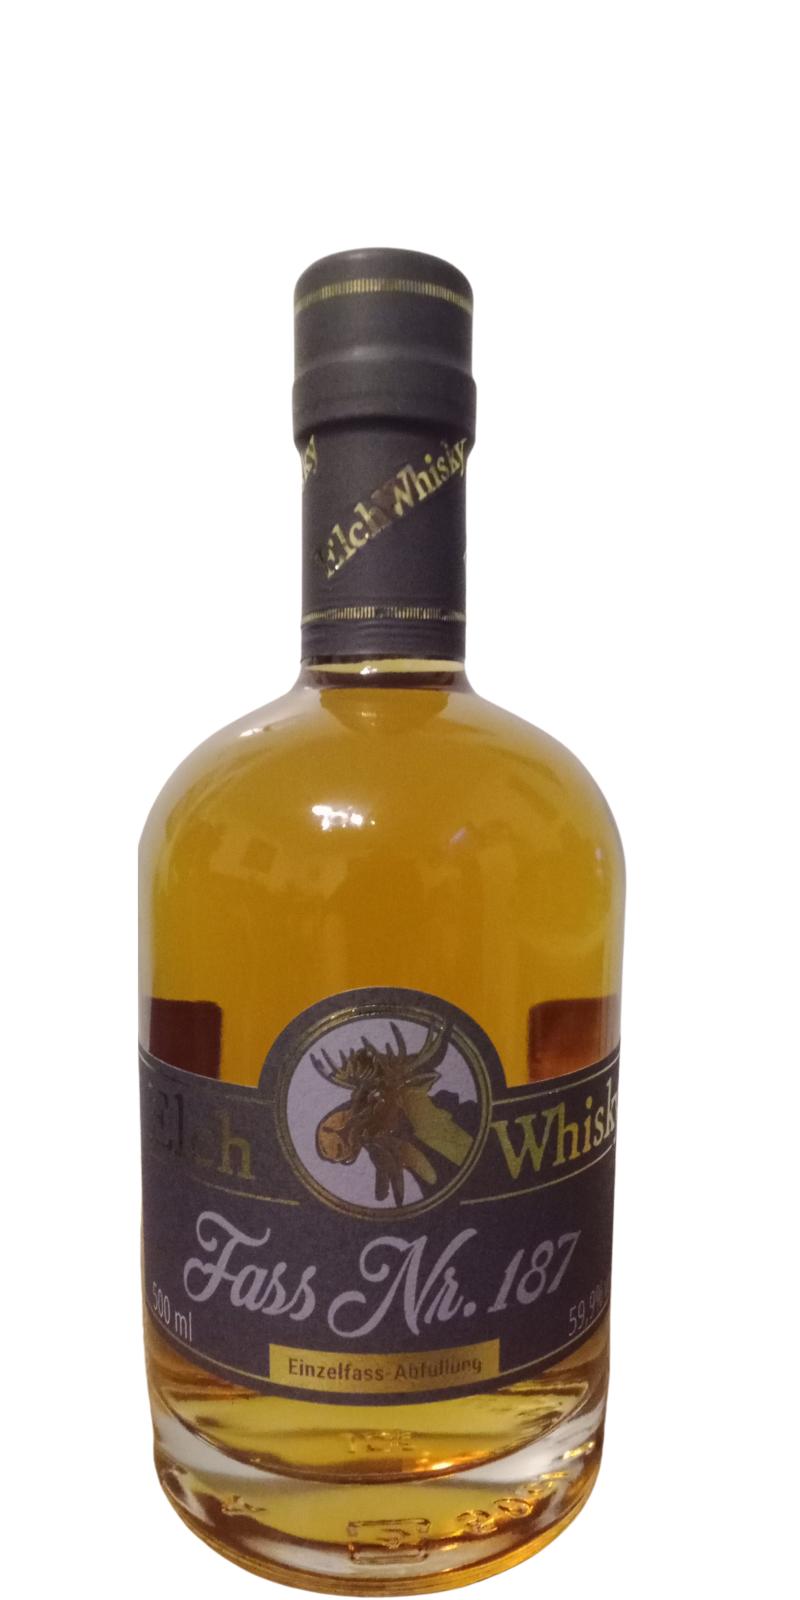 Elch Whisky Fass Nr. 187 Aprikosen Brandy Finish 59.9% 500ml